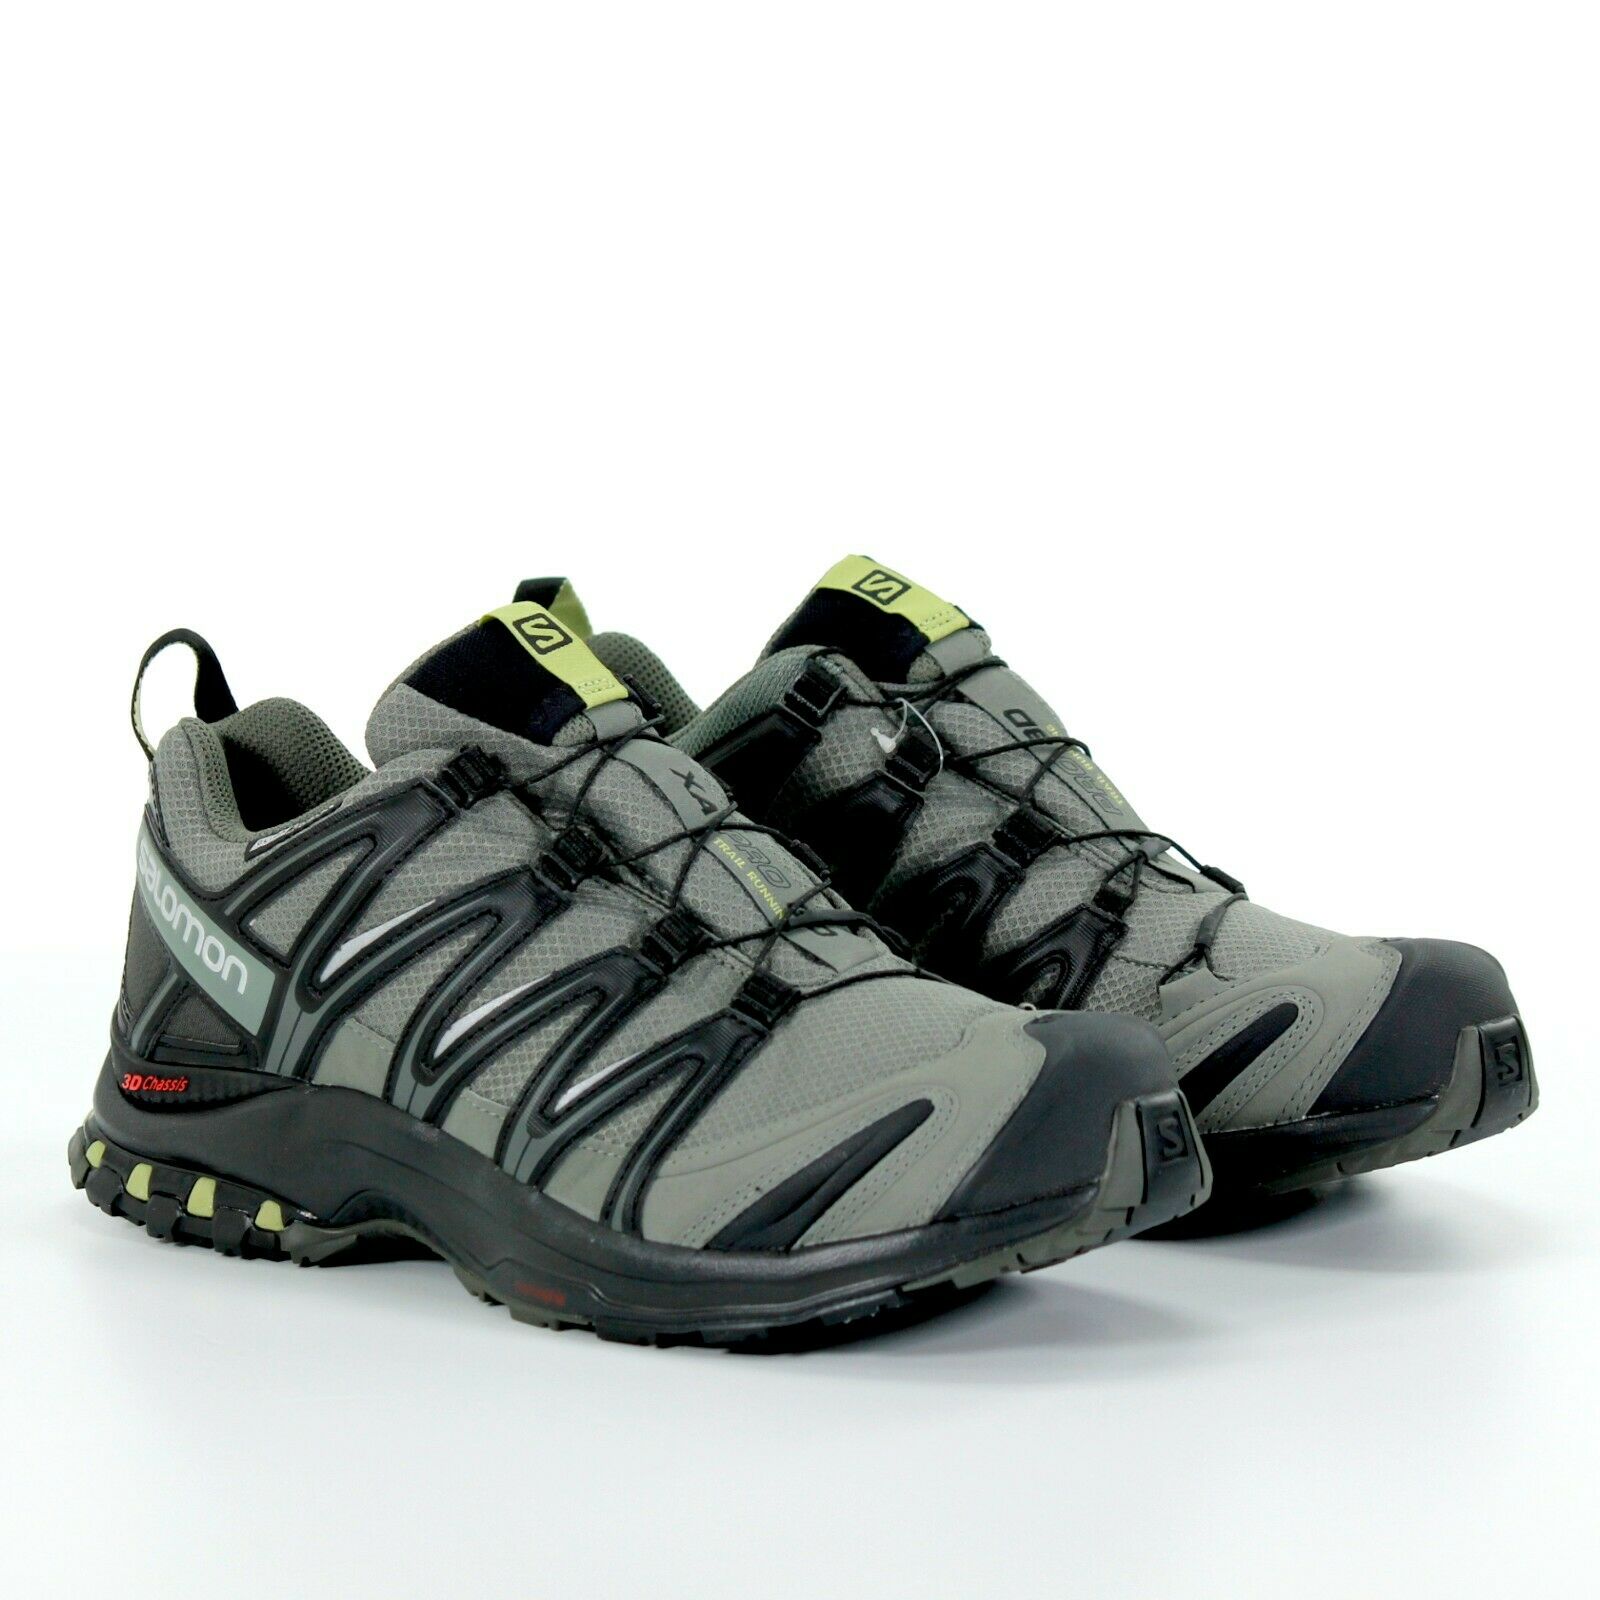 Salomon Mens XA Pro 3D Trail Running Low Top Shoes Black Castor Grey Size 10 New